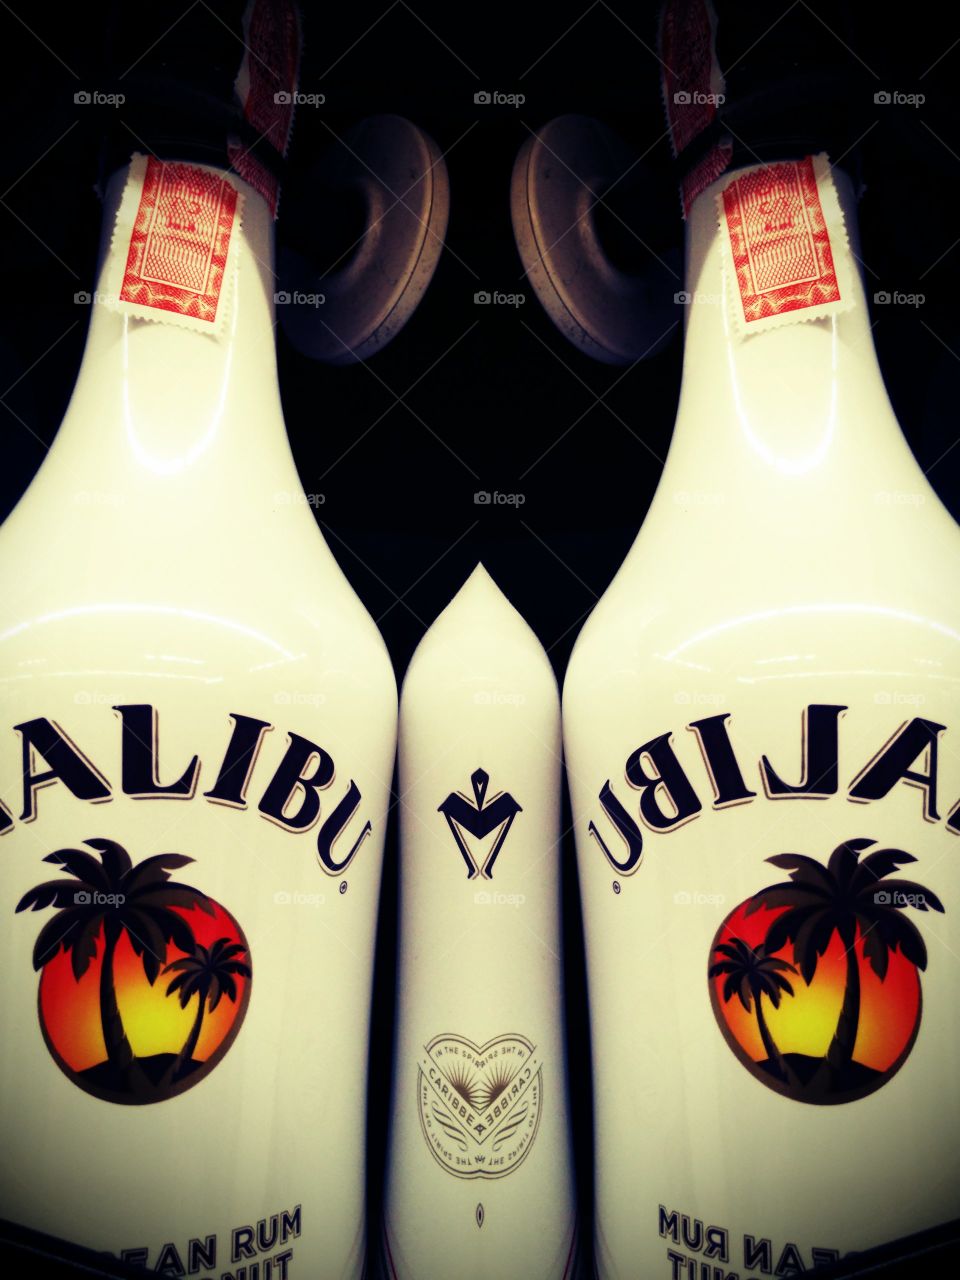 Malibu Rum. The bottles of Malibu Rum in the rack